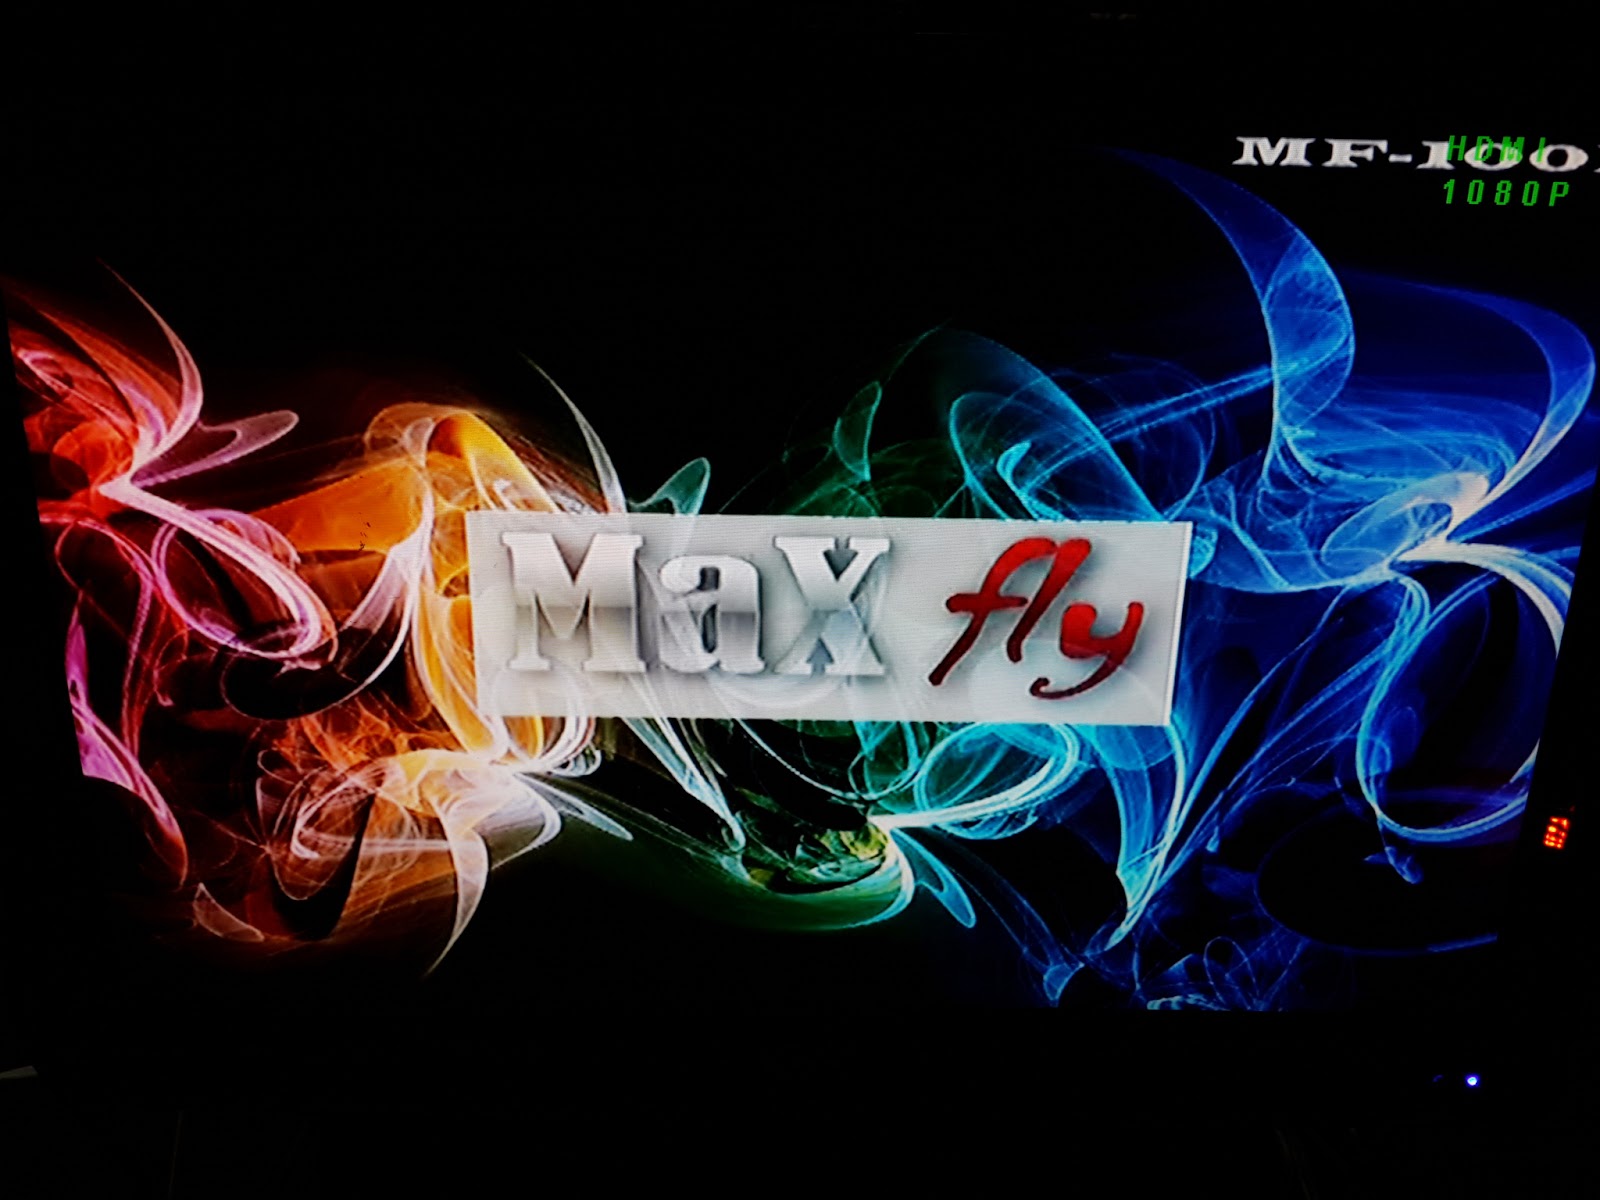 MAXFLY MF 1001 HD LANÇAMENTO - 25/06/2014 | MESTRE DO AZ